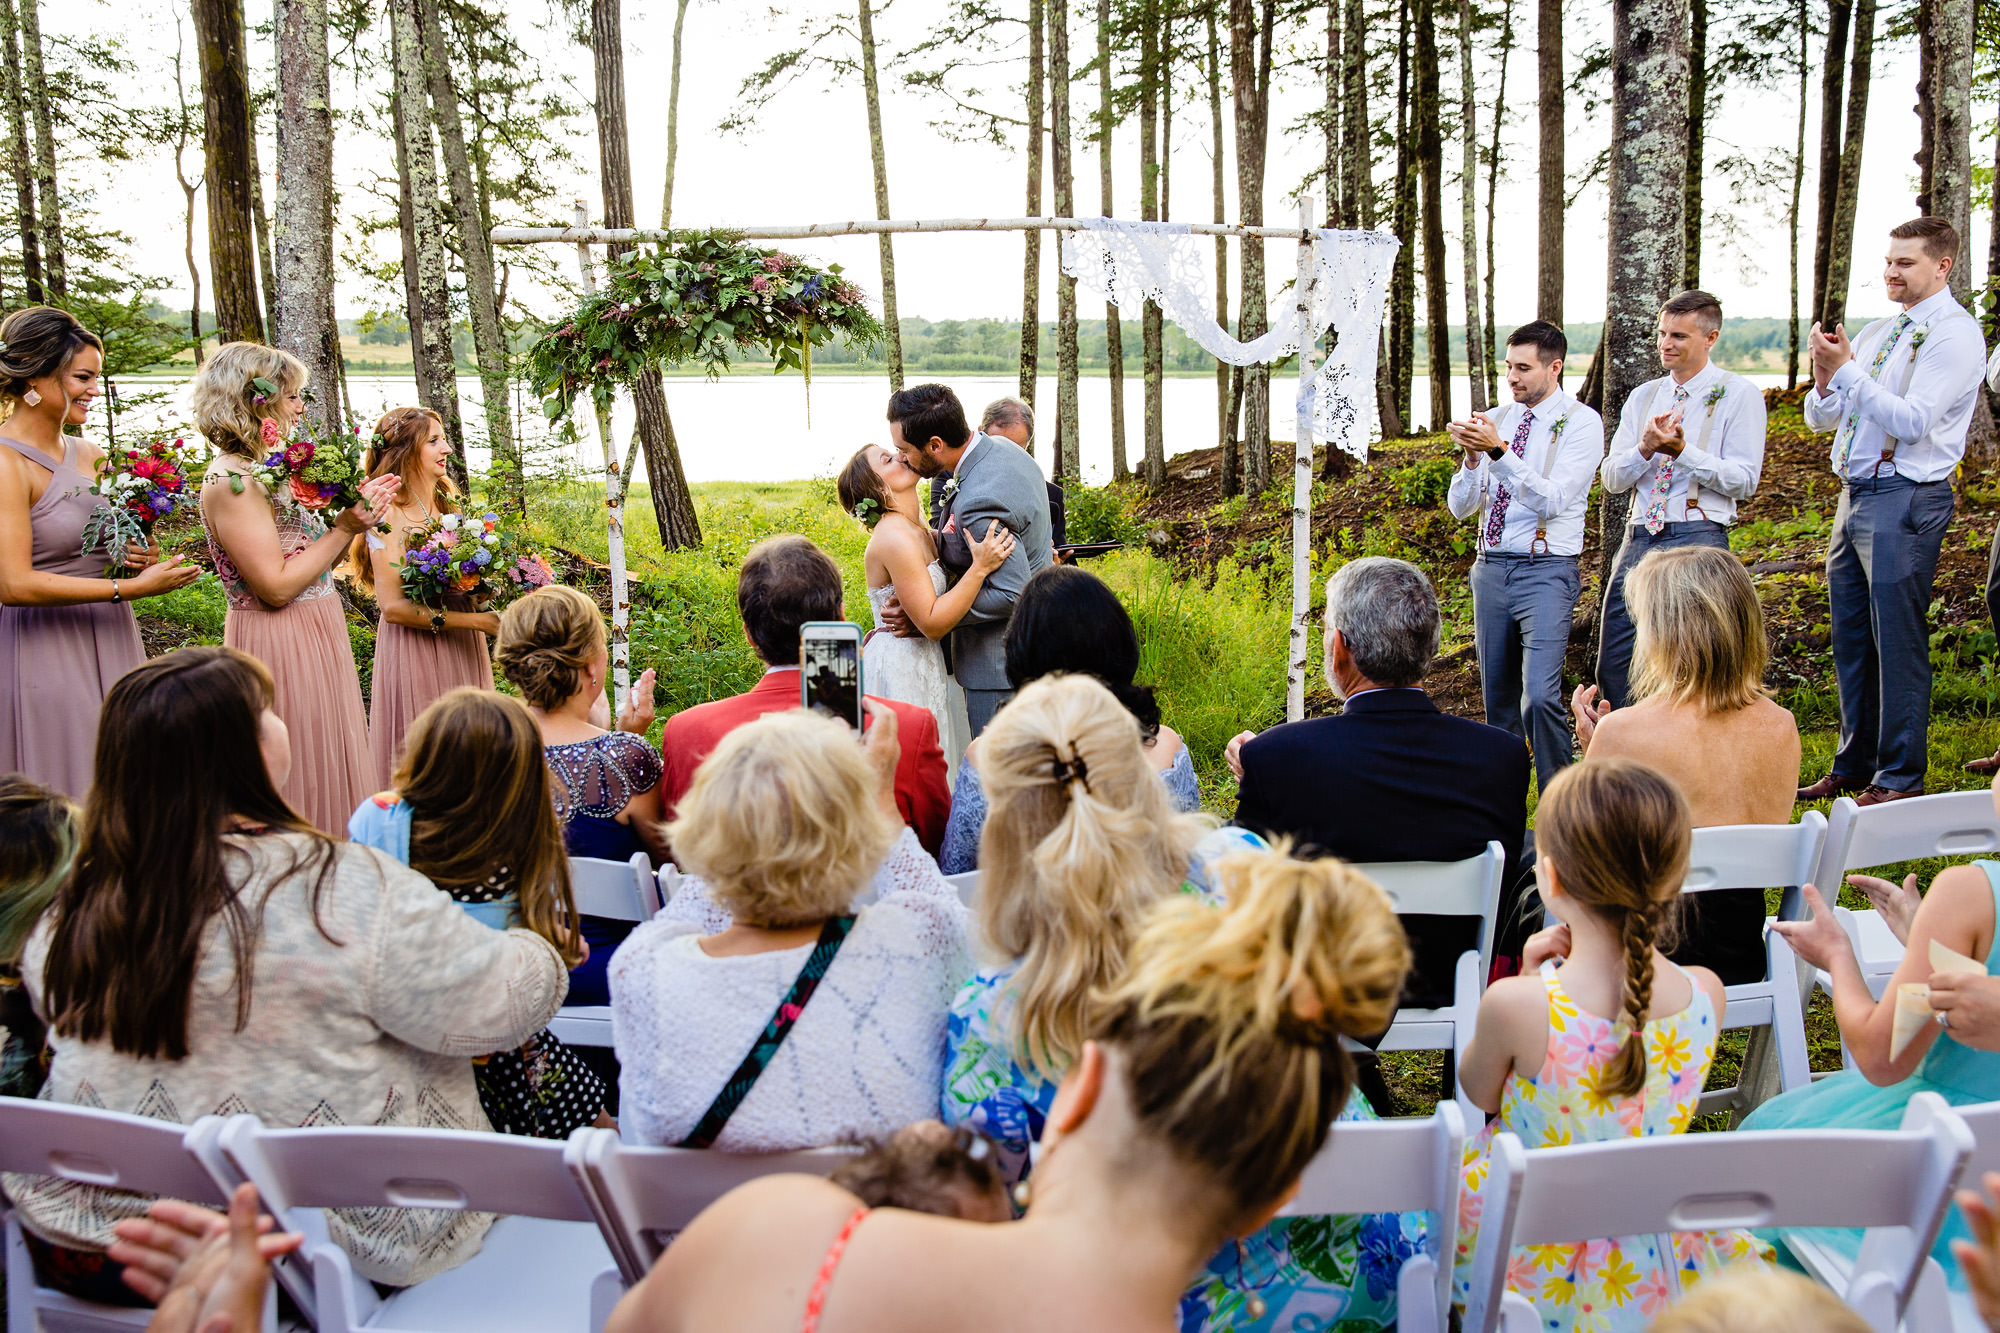 A beautiful Lamoine Maine wedding ceremony